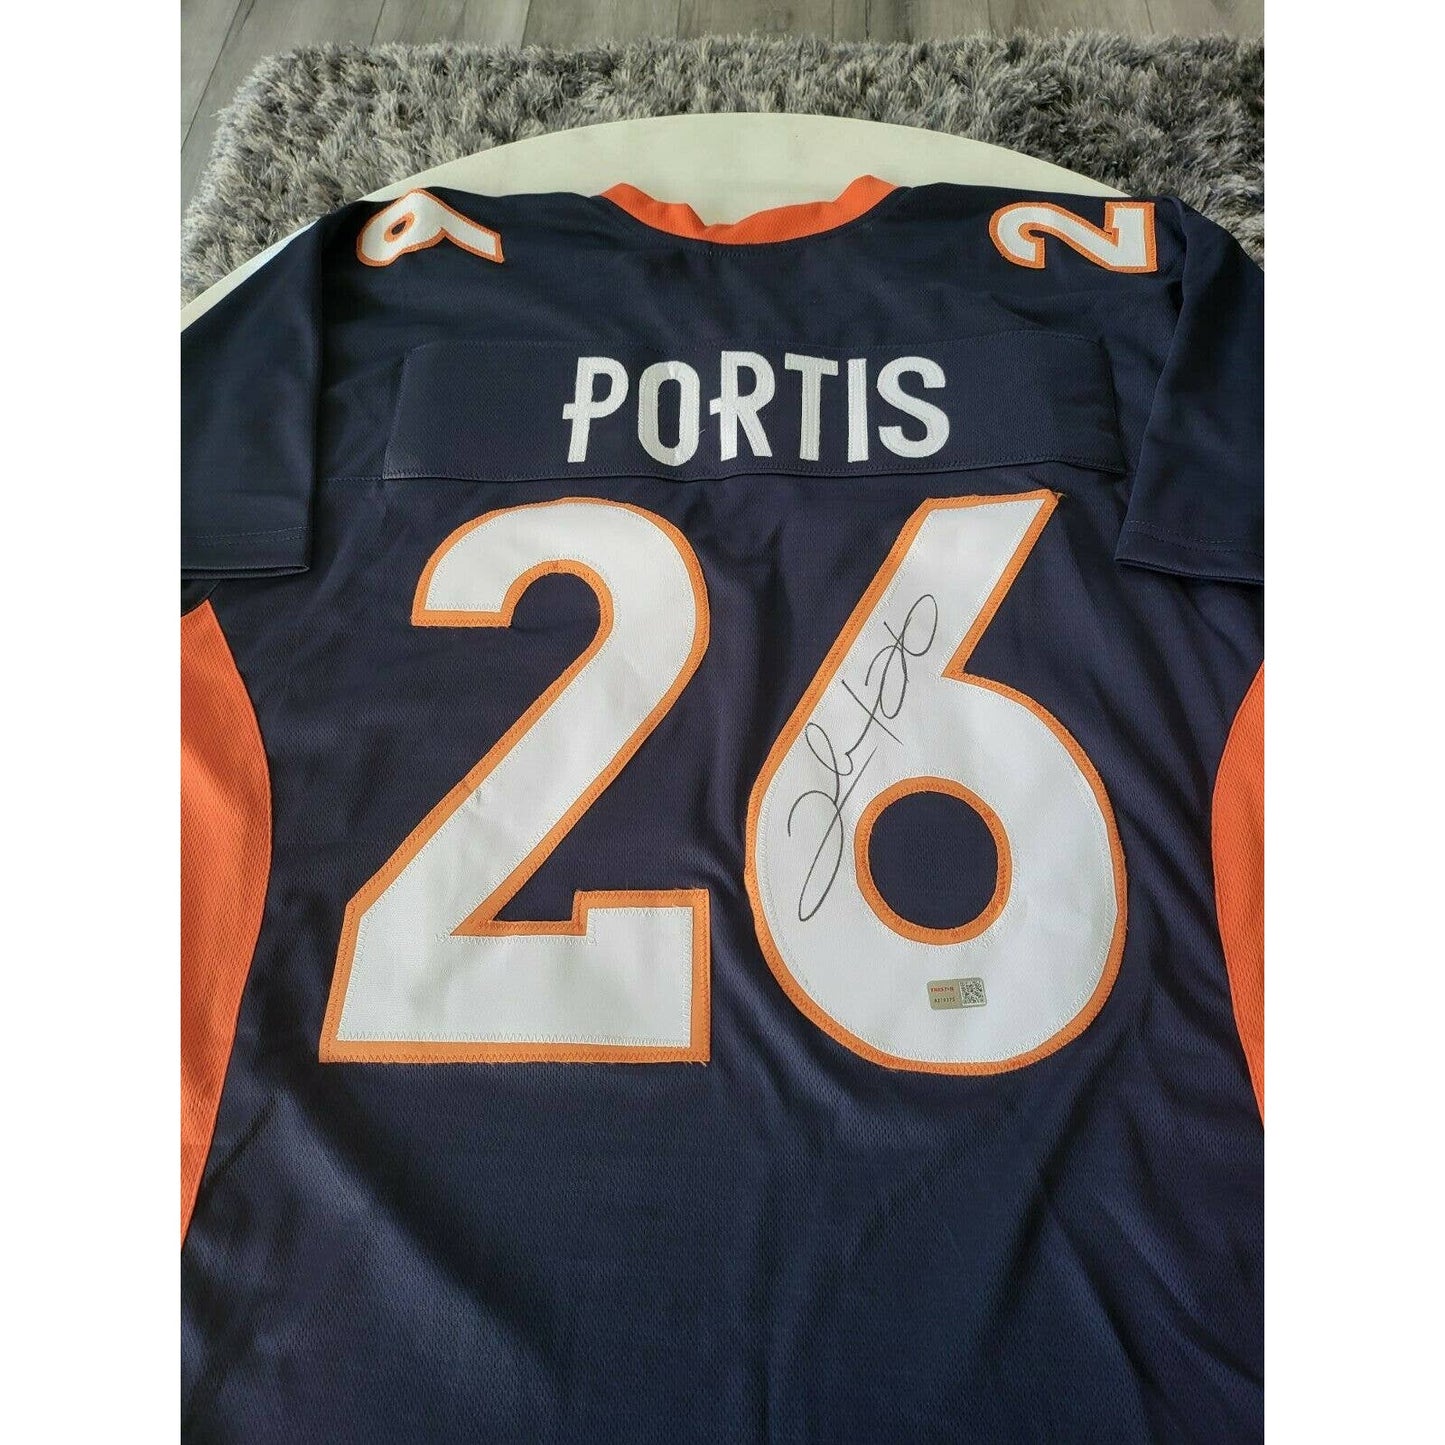 Clinton Portis Autographed/Signed Jersey TRISTAR Denver Broncos - TreasuresEvolved